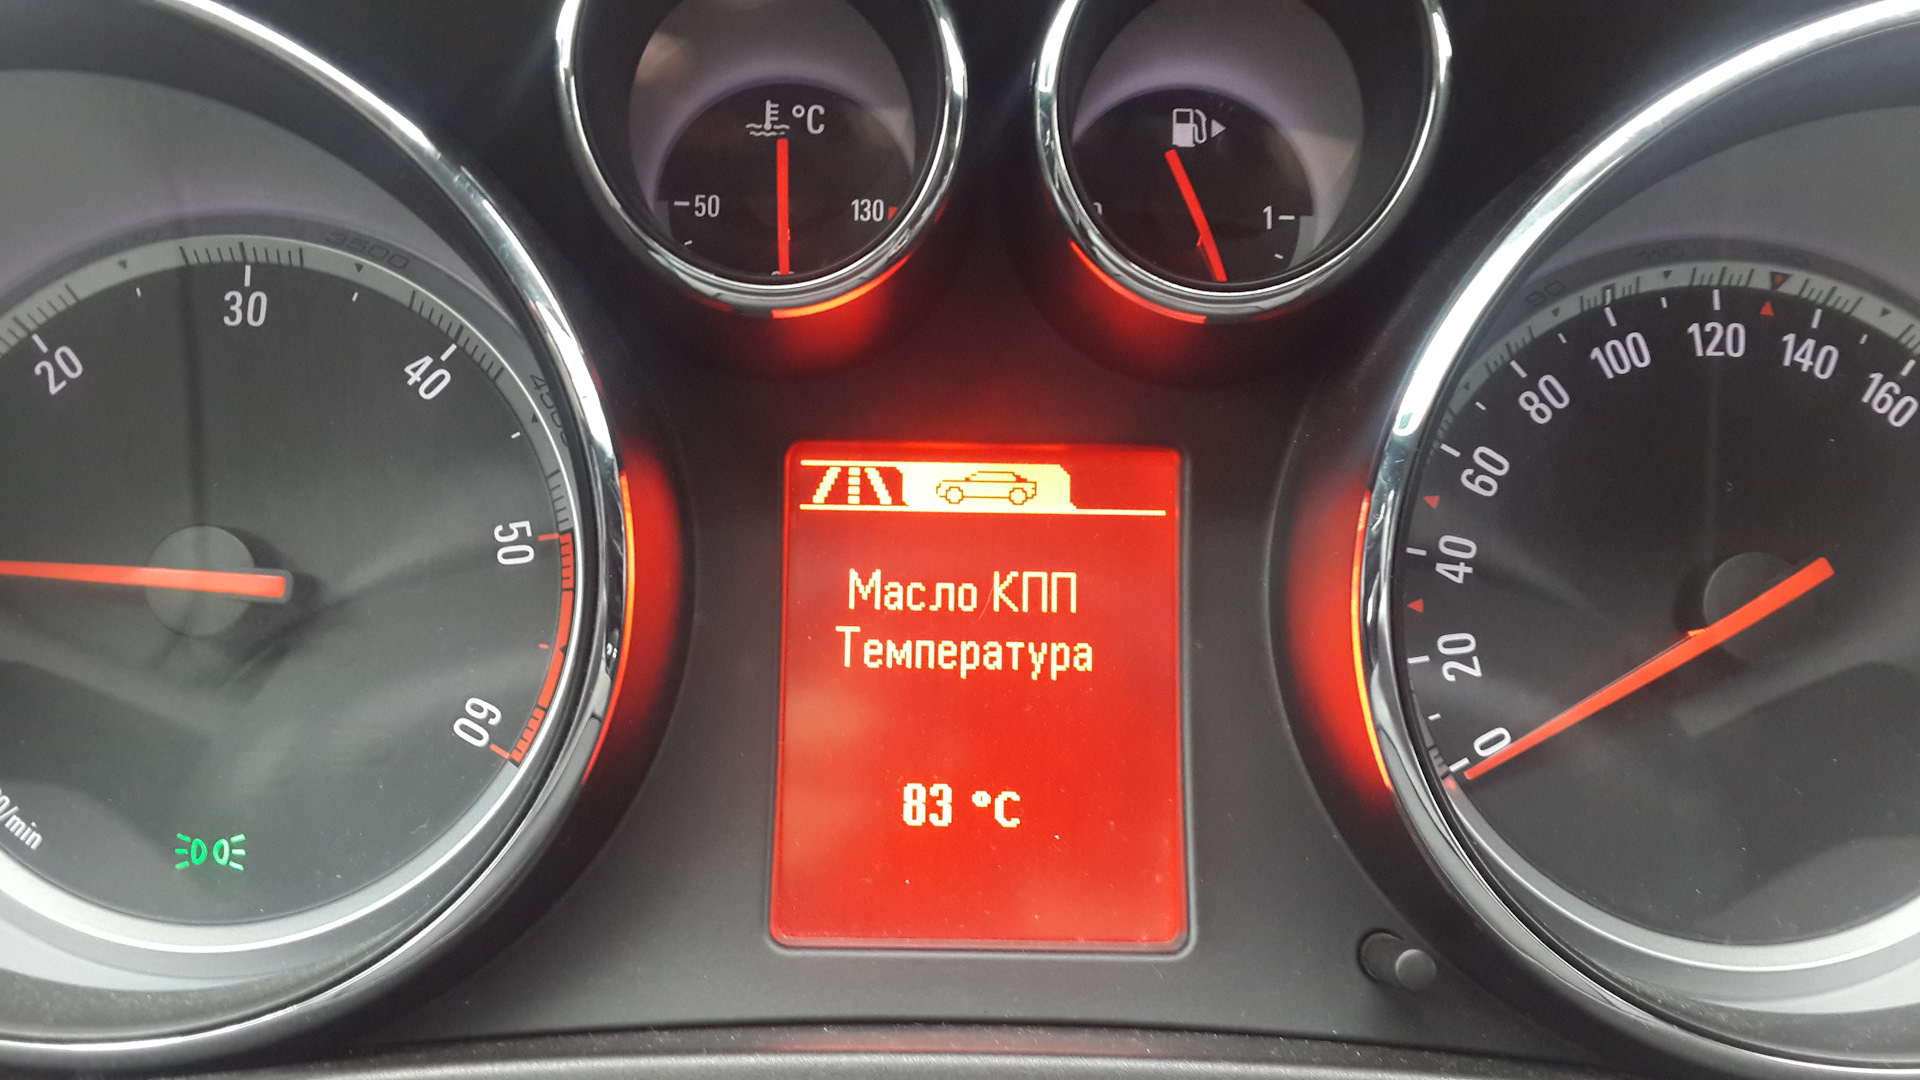 Масло в коробку опель инсигния. Opel Insignia 2012 2.0 Turbo масло в коробке. Opel Insignia 2012 2.0 масло в АКПП. АКПП Опель Инсигния 2.0 турбо. Масло АКПП Инсигния 2.0 турбо.